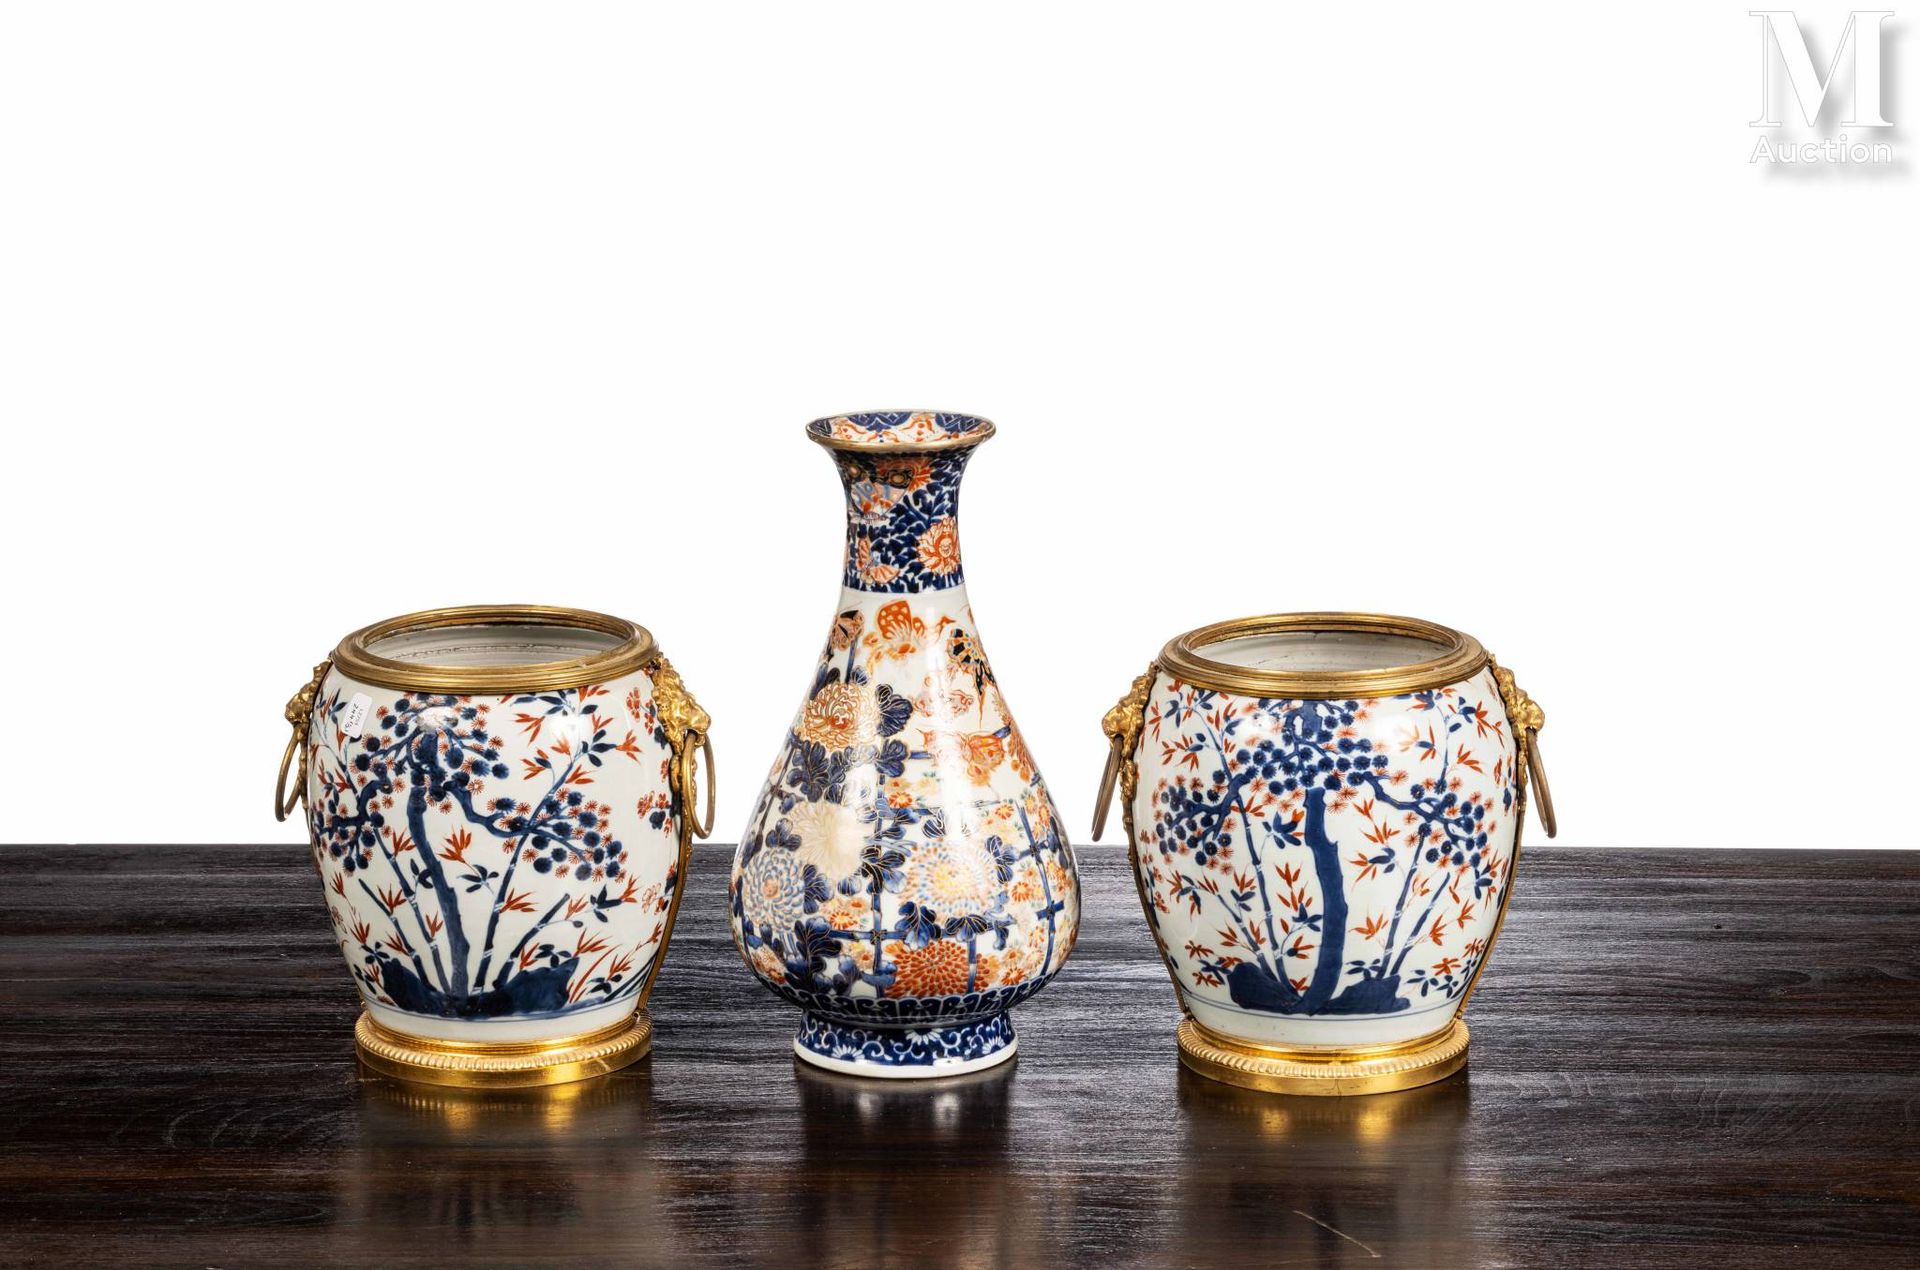 JAPON, XIXe siècle 一对伊万里瓷器带植物装饰的花盆，包括欧洲鎏金铜套。附有一个伊万里瓷器的瓶子花瓶。

高度：23厘米
直径：18.5厘米

&hellip;